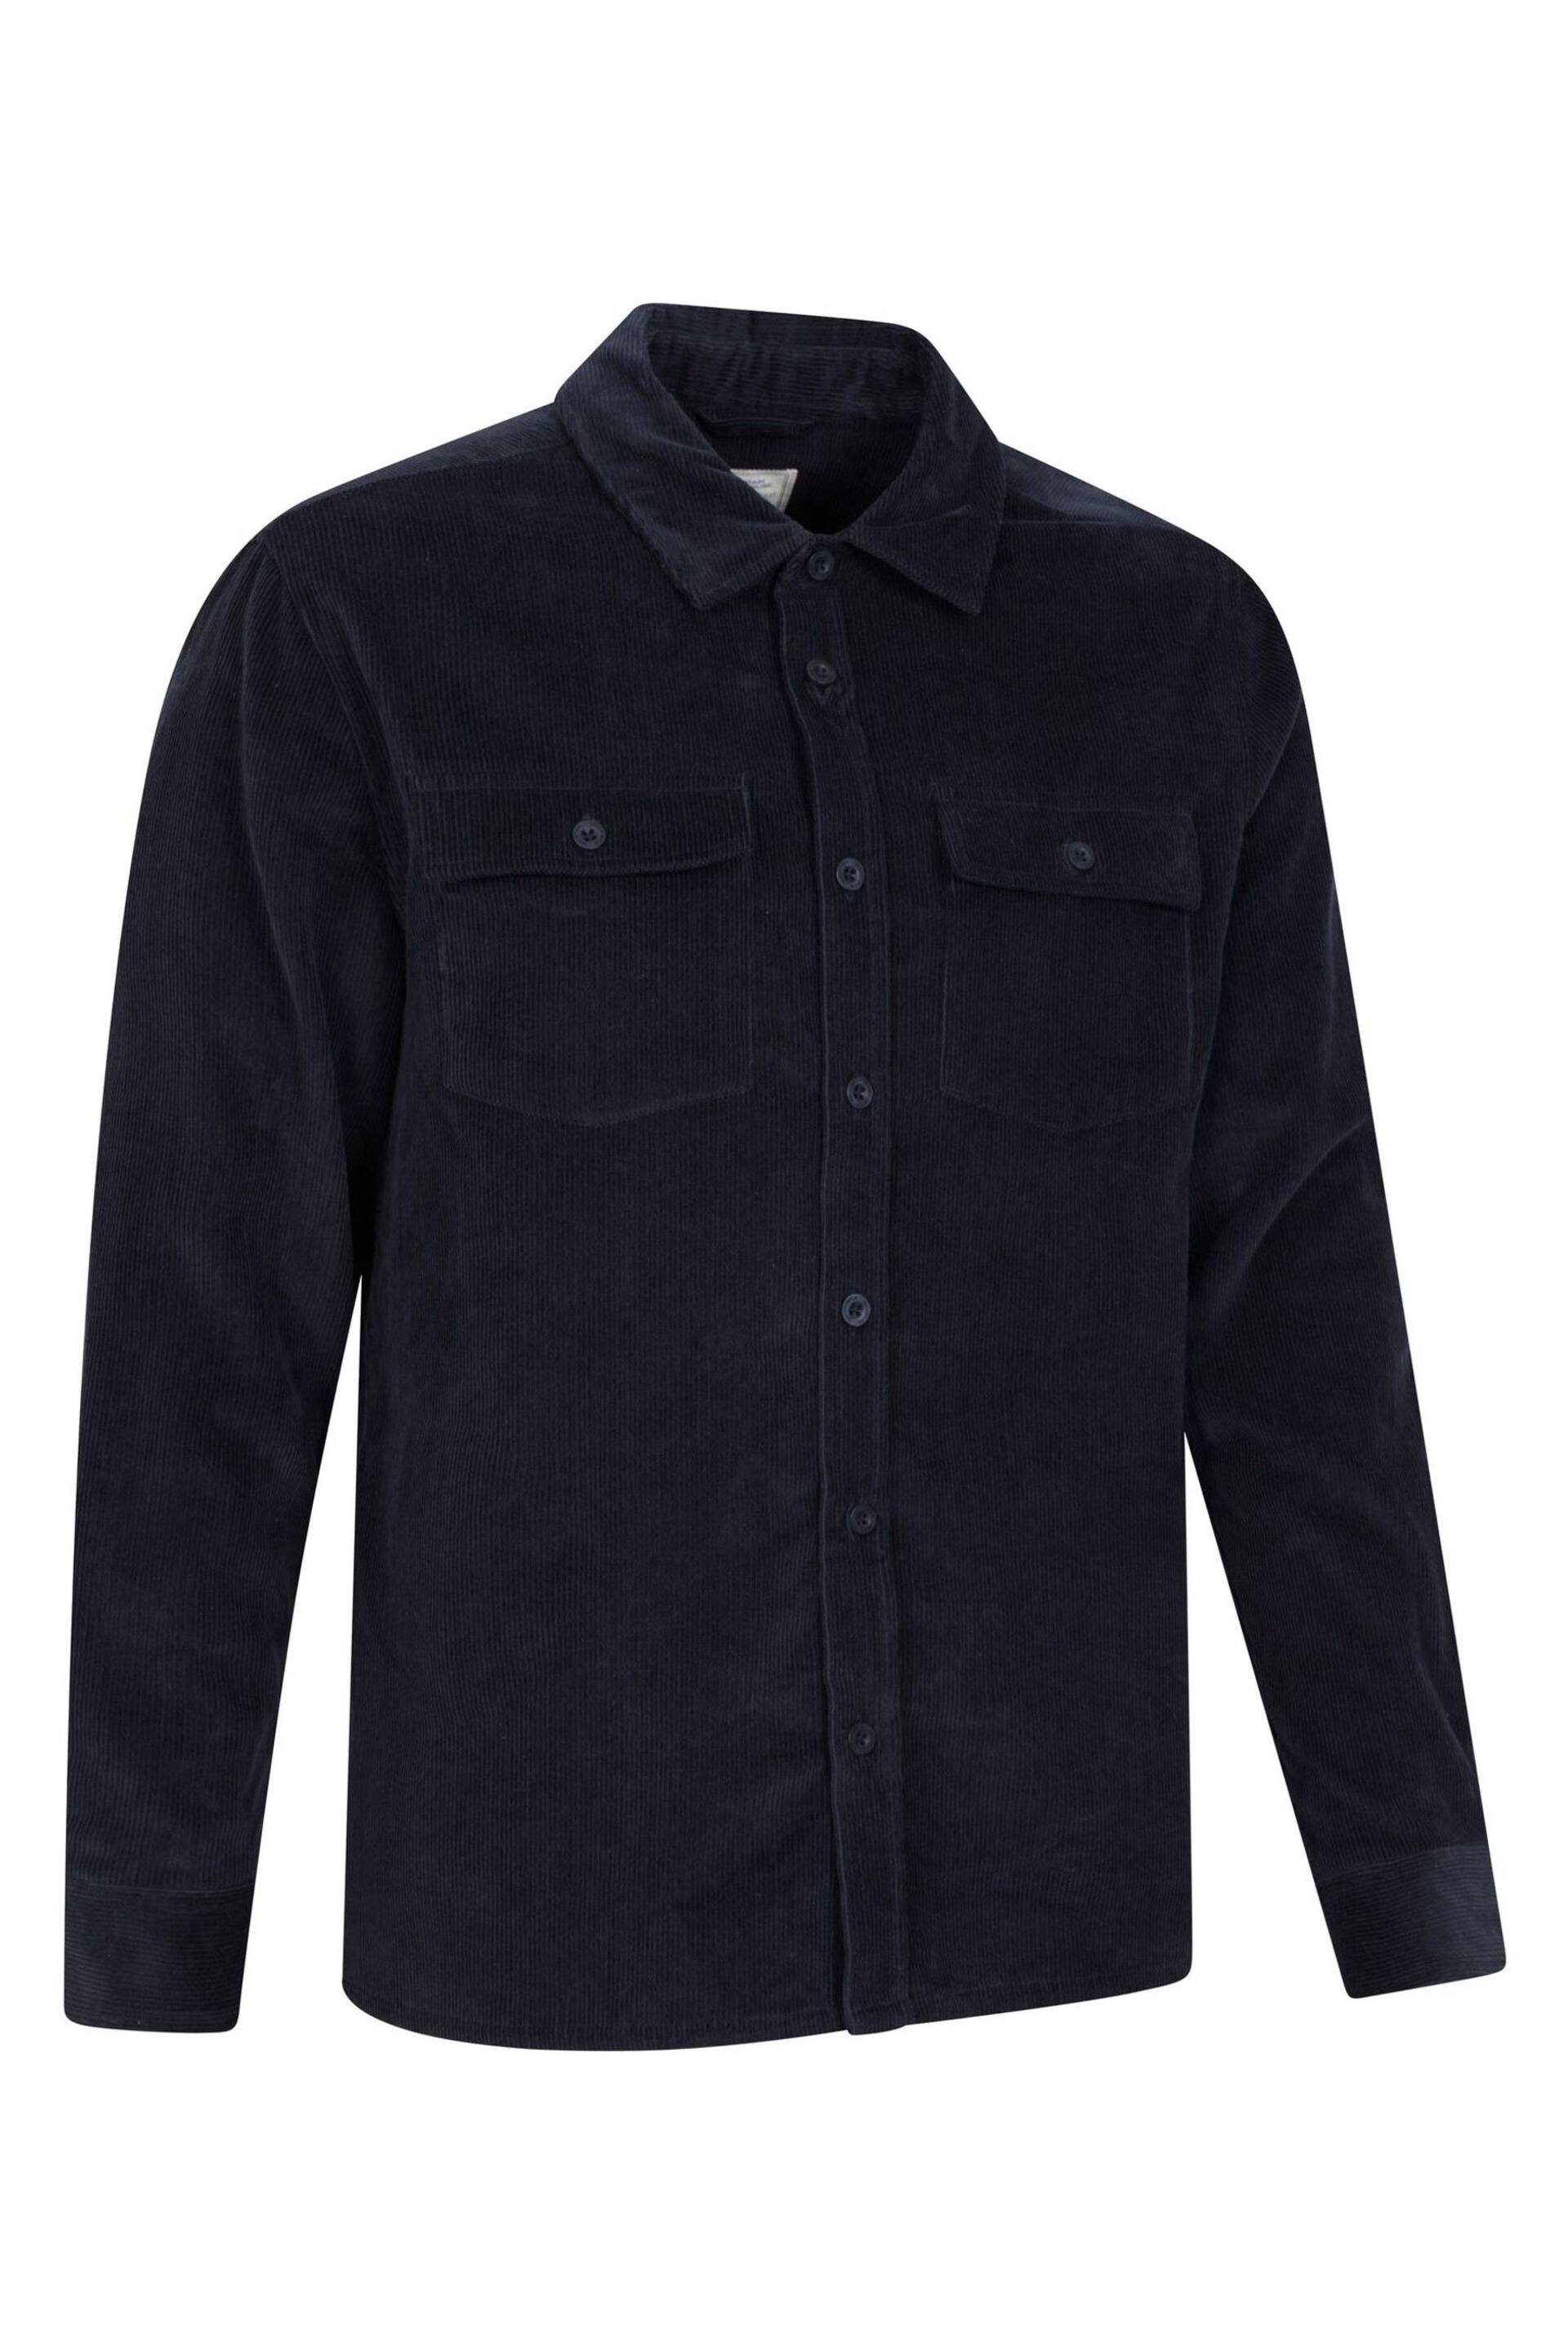 Mountain Warehouse Blue Dark Mens Farrow Cord Long Sleeve Shirt - Image 3 of 6